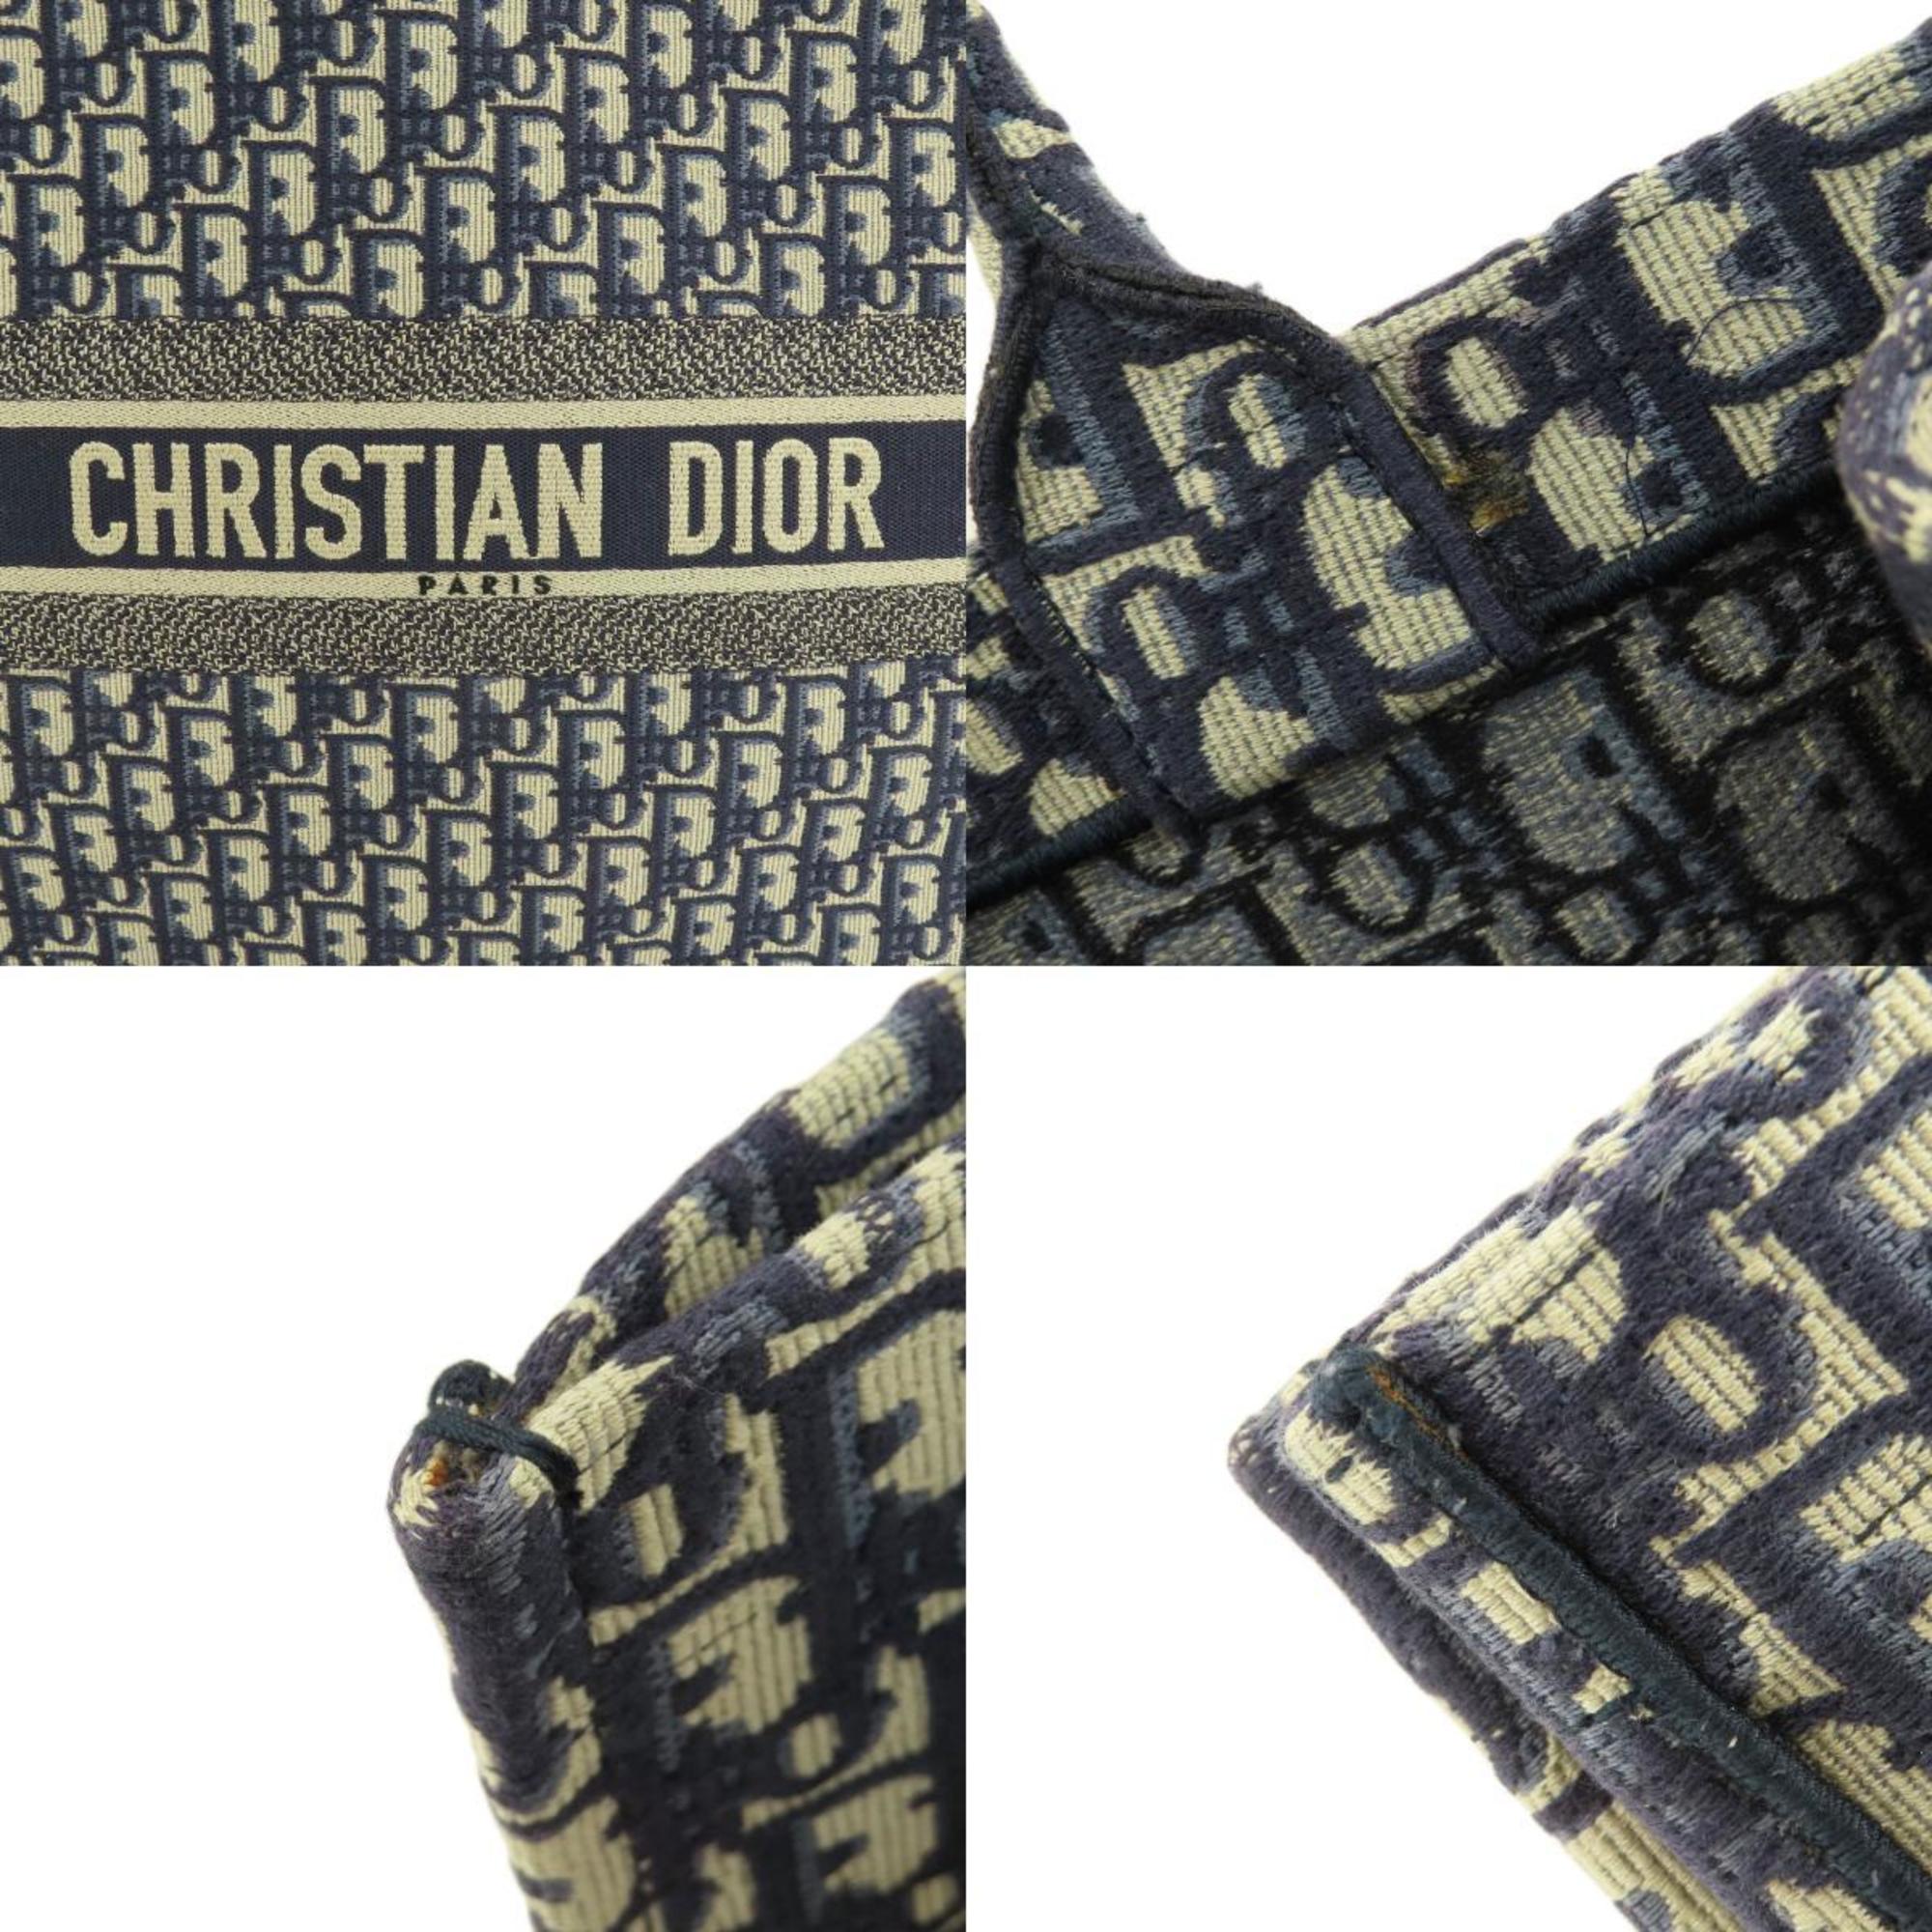 Christian Dior Book Tote Bag Canvas Women's